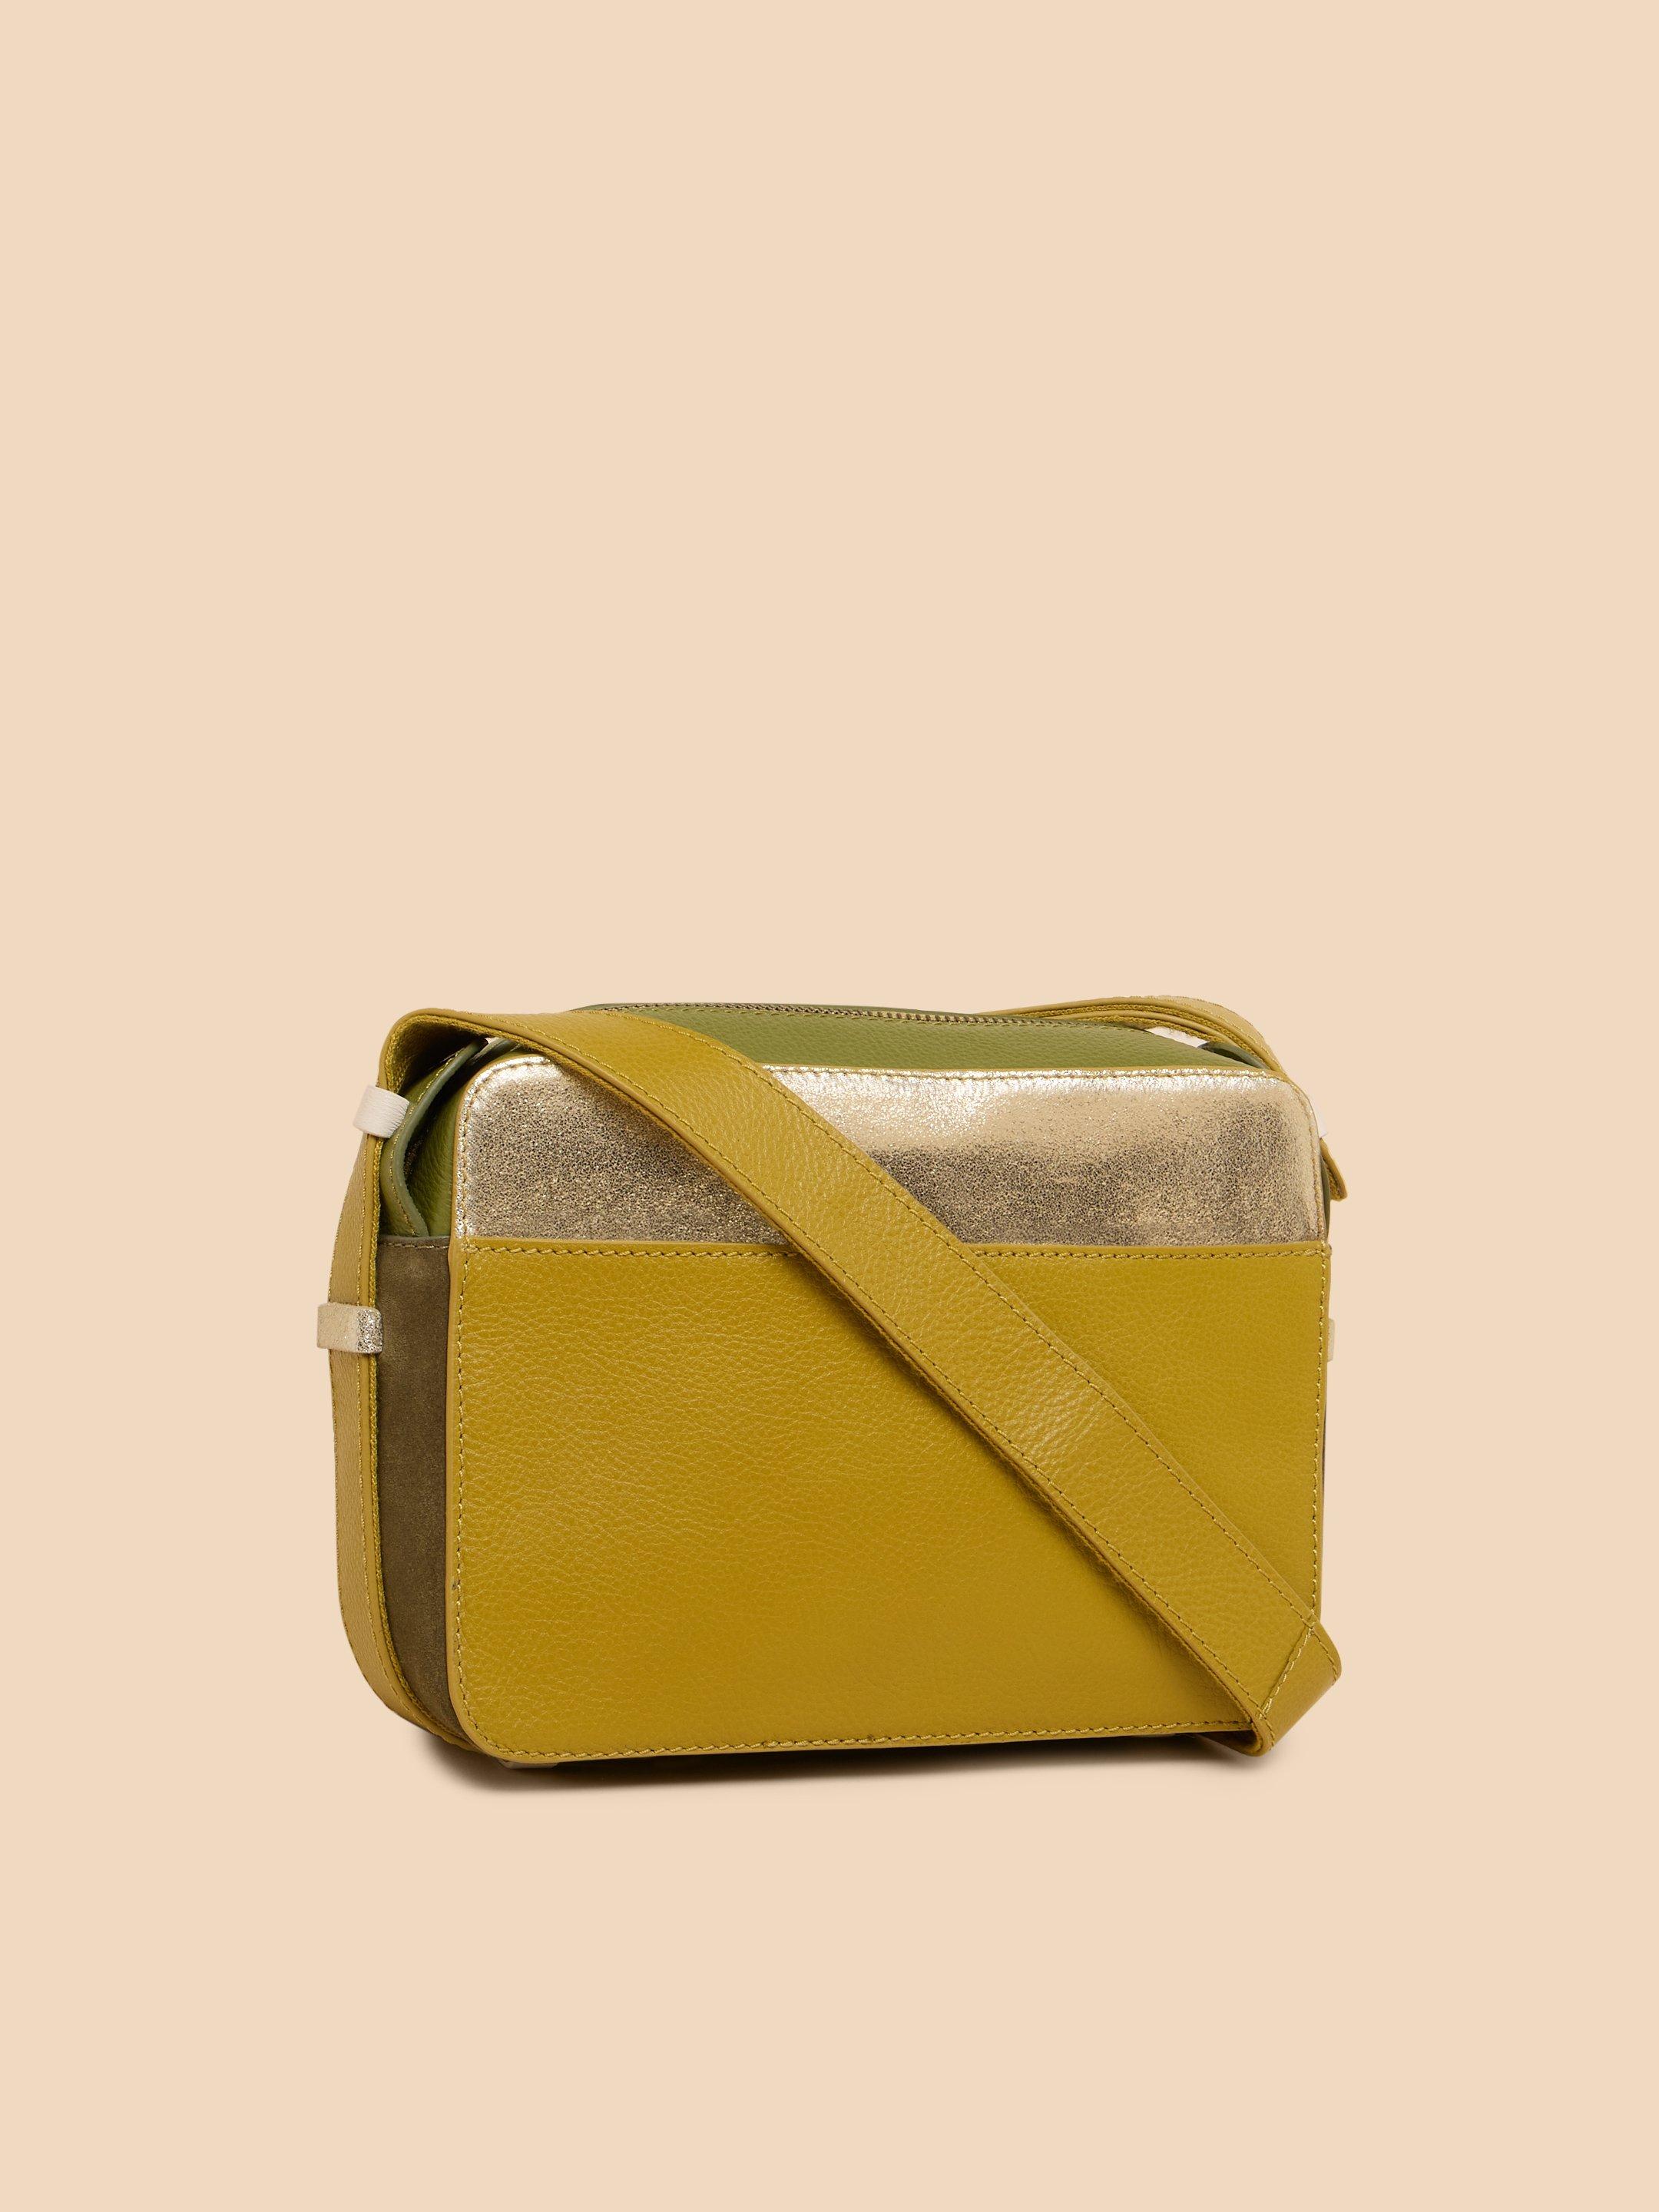 Leather Lola Camera Bag in GREEN MLT - FLAT BACK